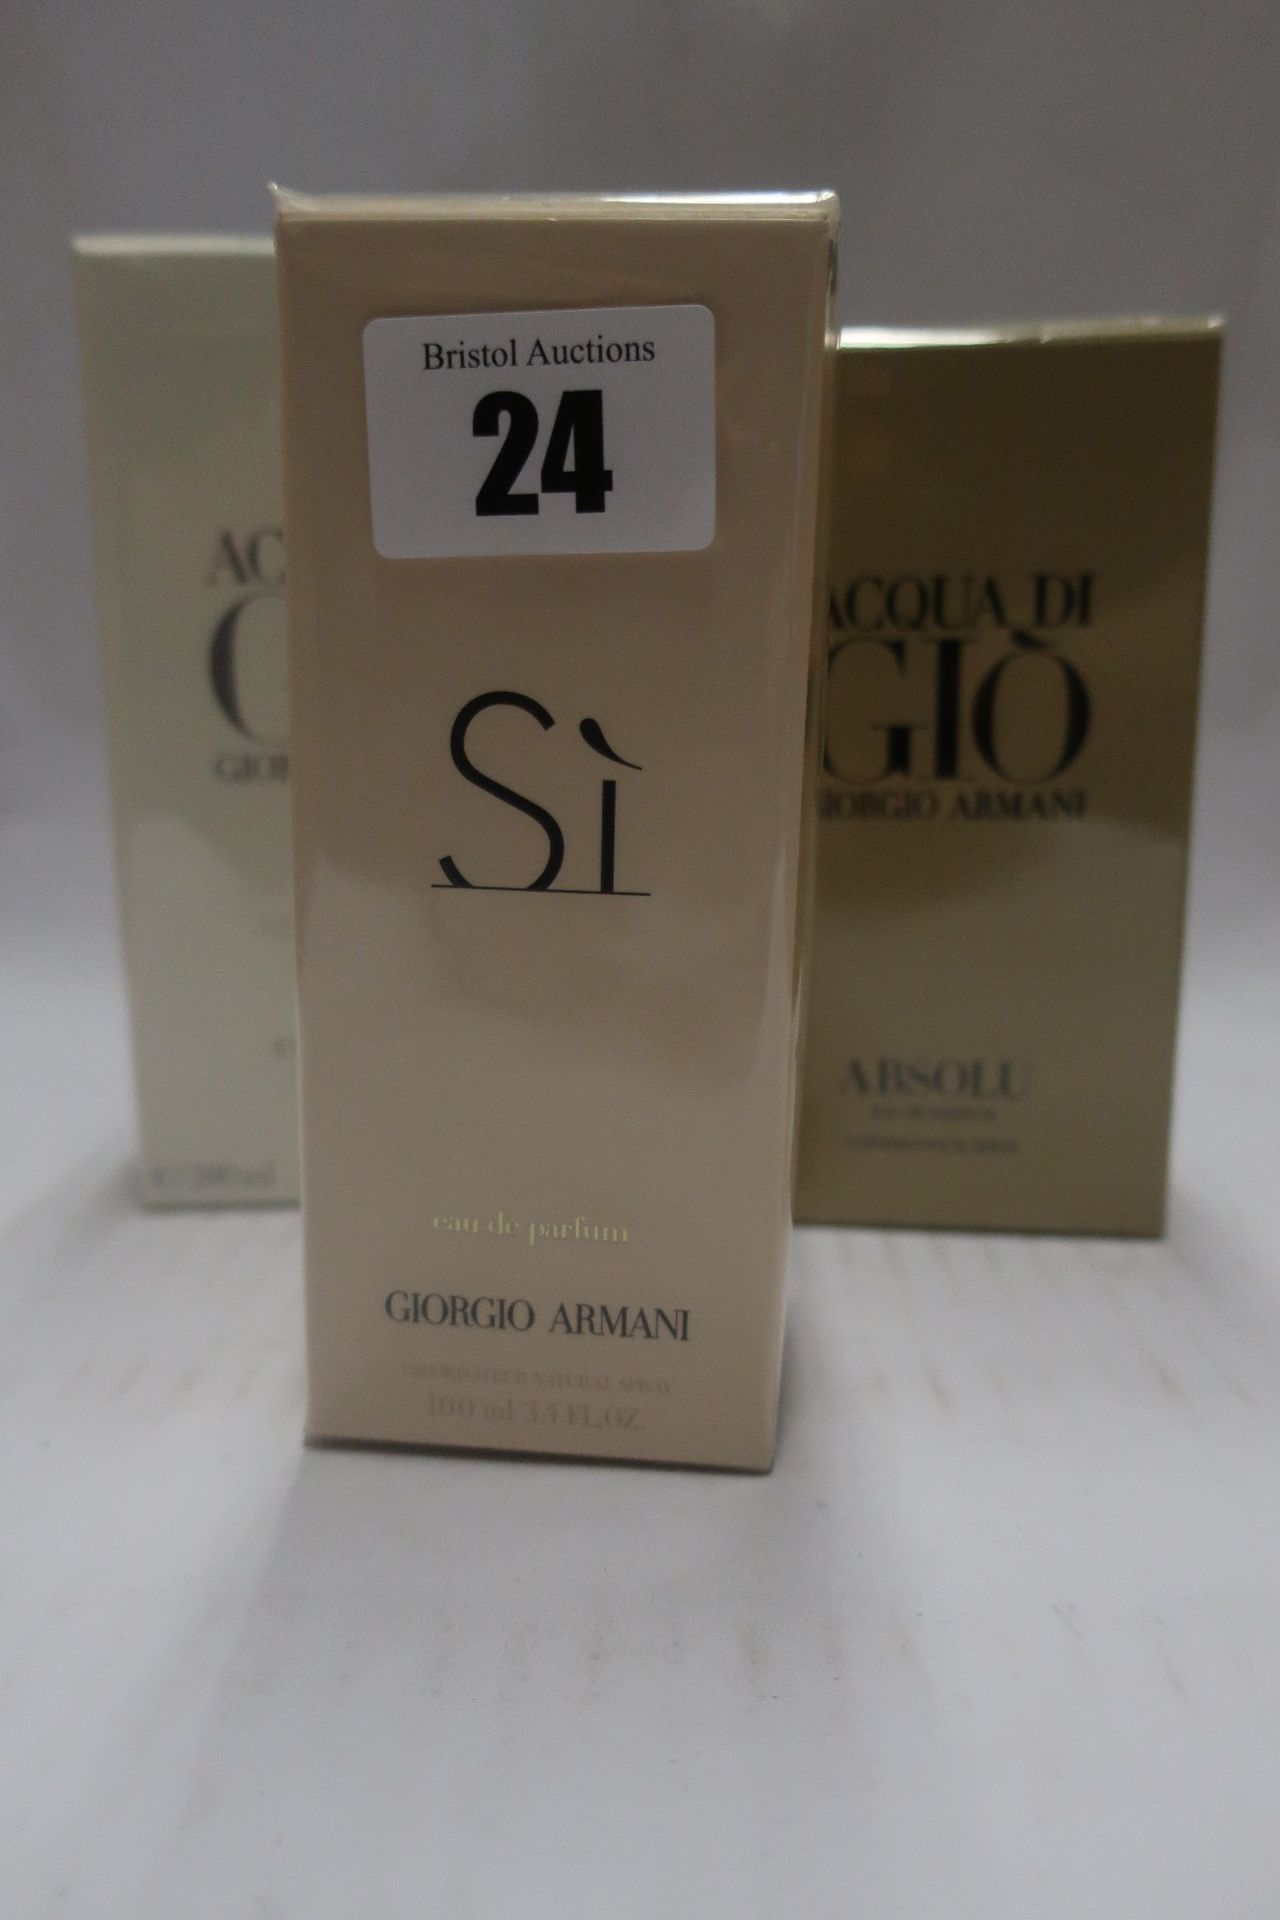 An as new Giorgio Armani Si eau de parfum (100ml), an as new Giorgio Armani Acqua di Gio eau de